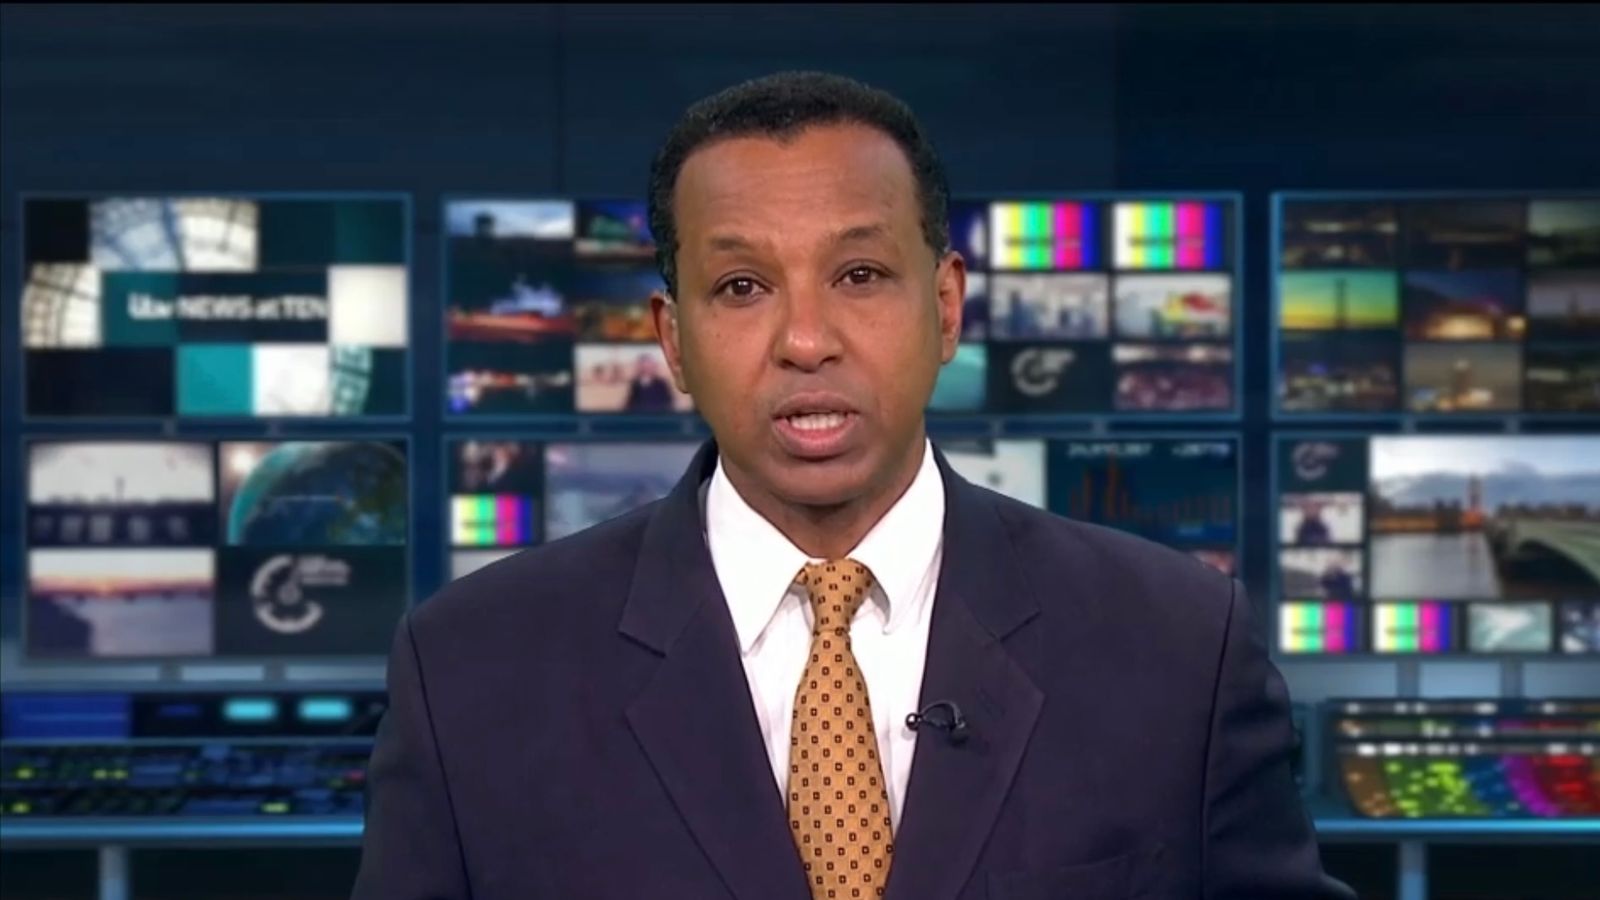 ITV newsreader Rageh Omaar ‘receiving medical care’ after on-screen behaviour worries followers